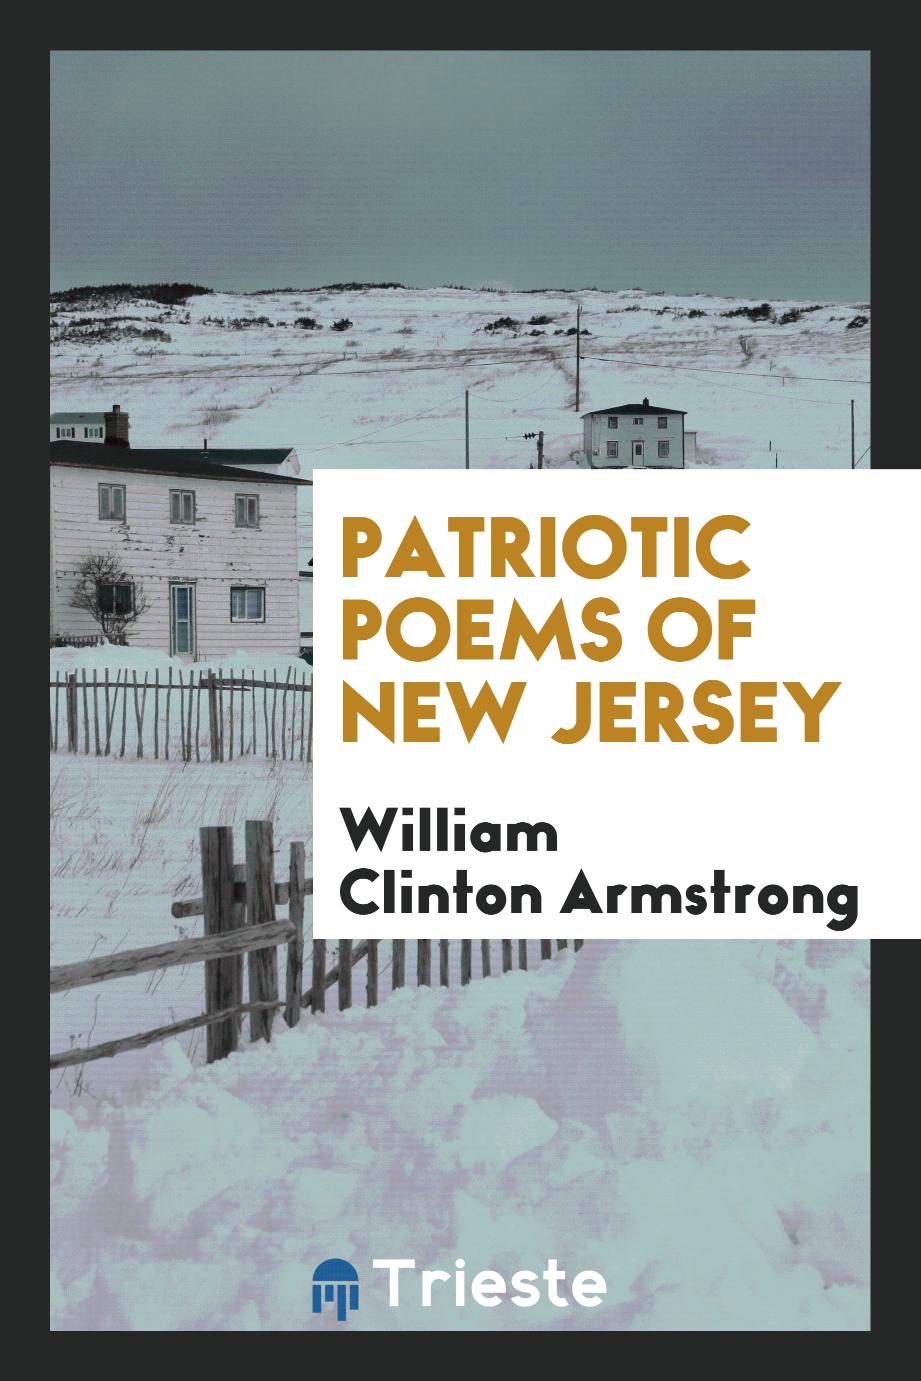 Patriotic poems of New Jersey